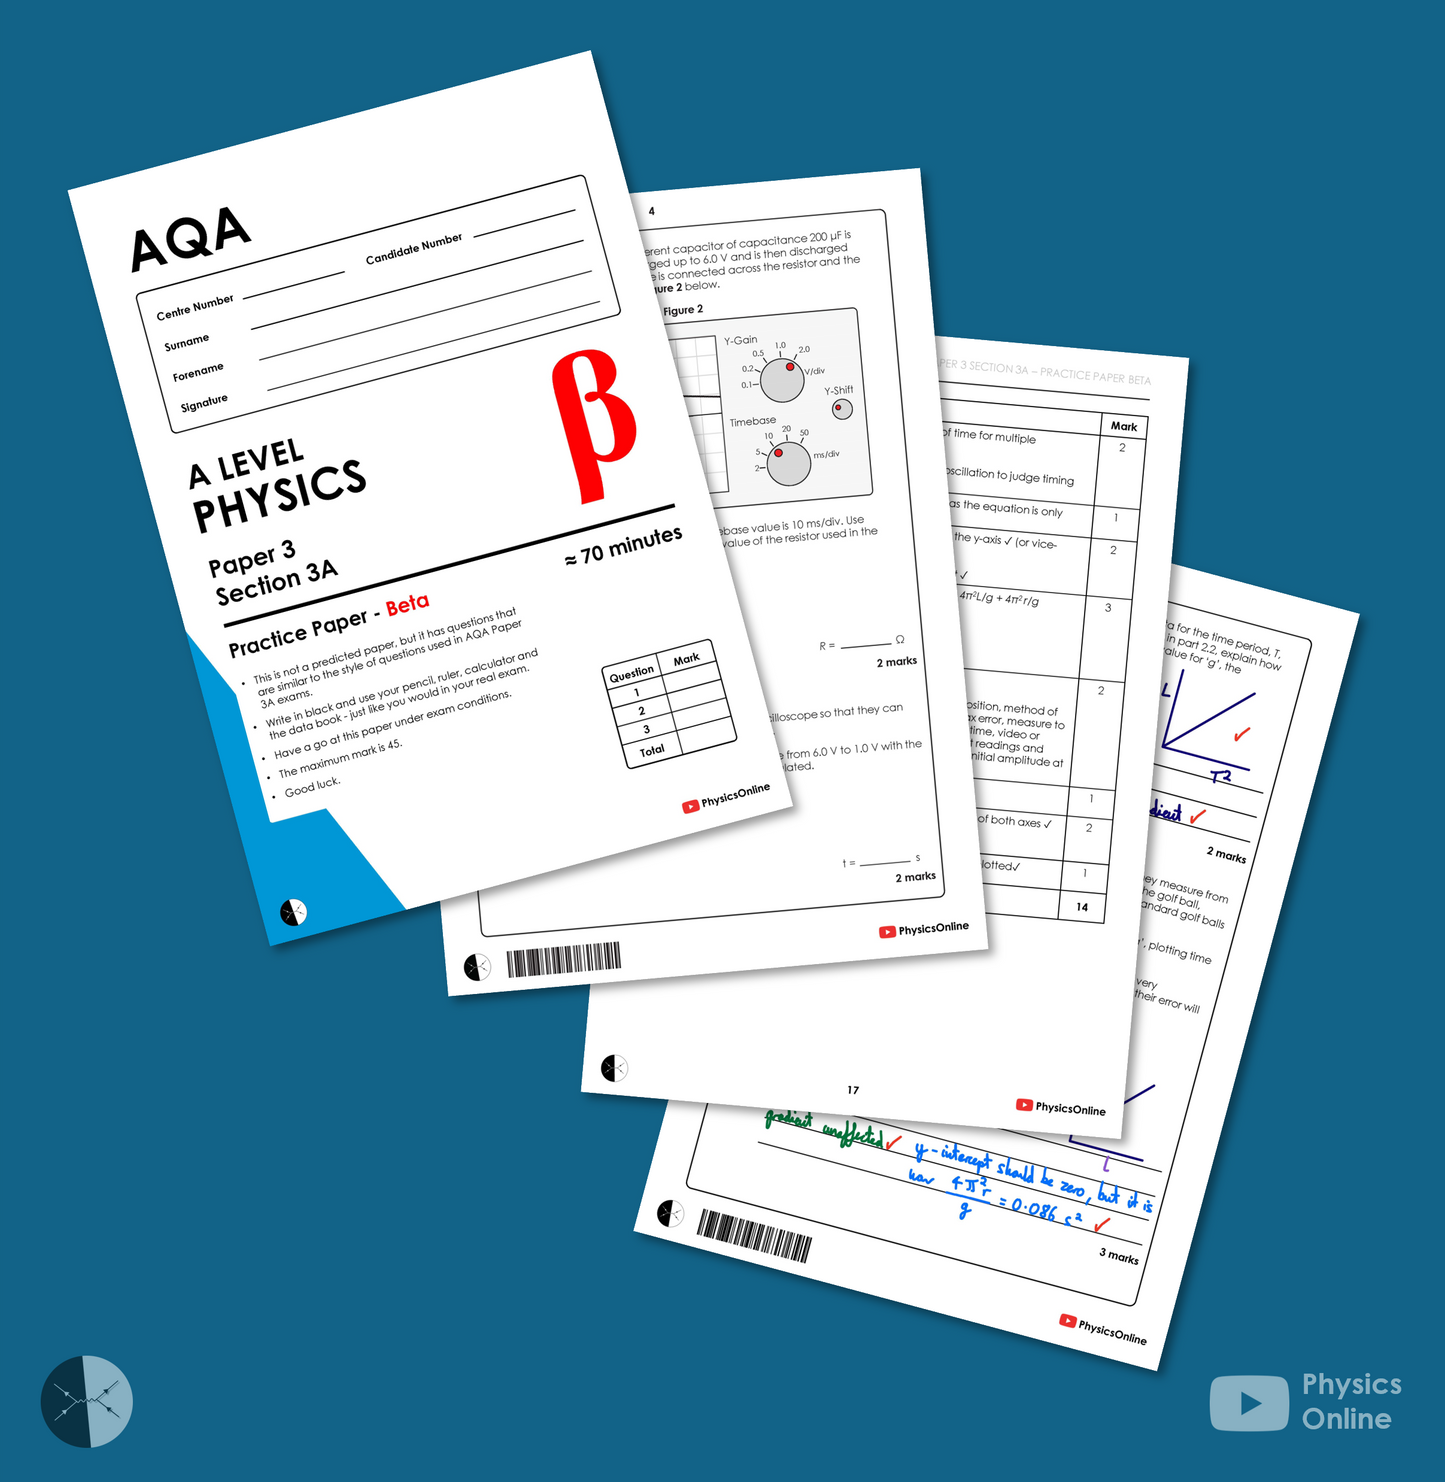 AQA Practice Paper | 3A - Beta | Teacher Issue | A Level Physics